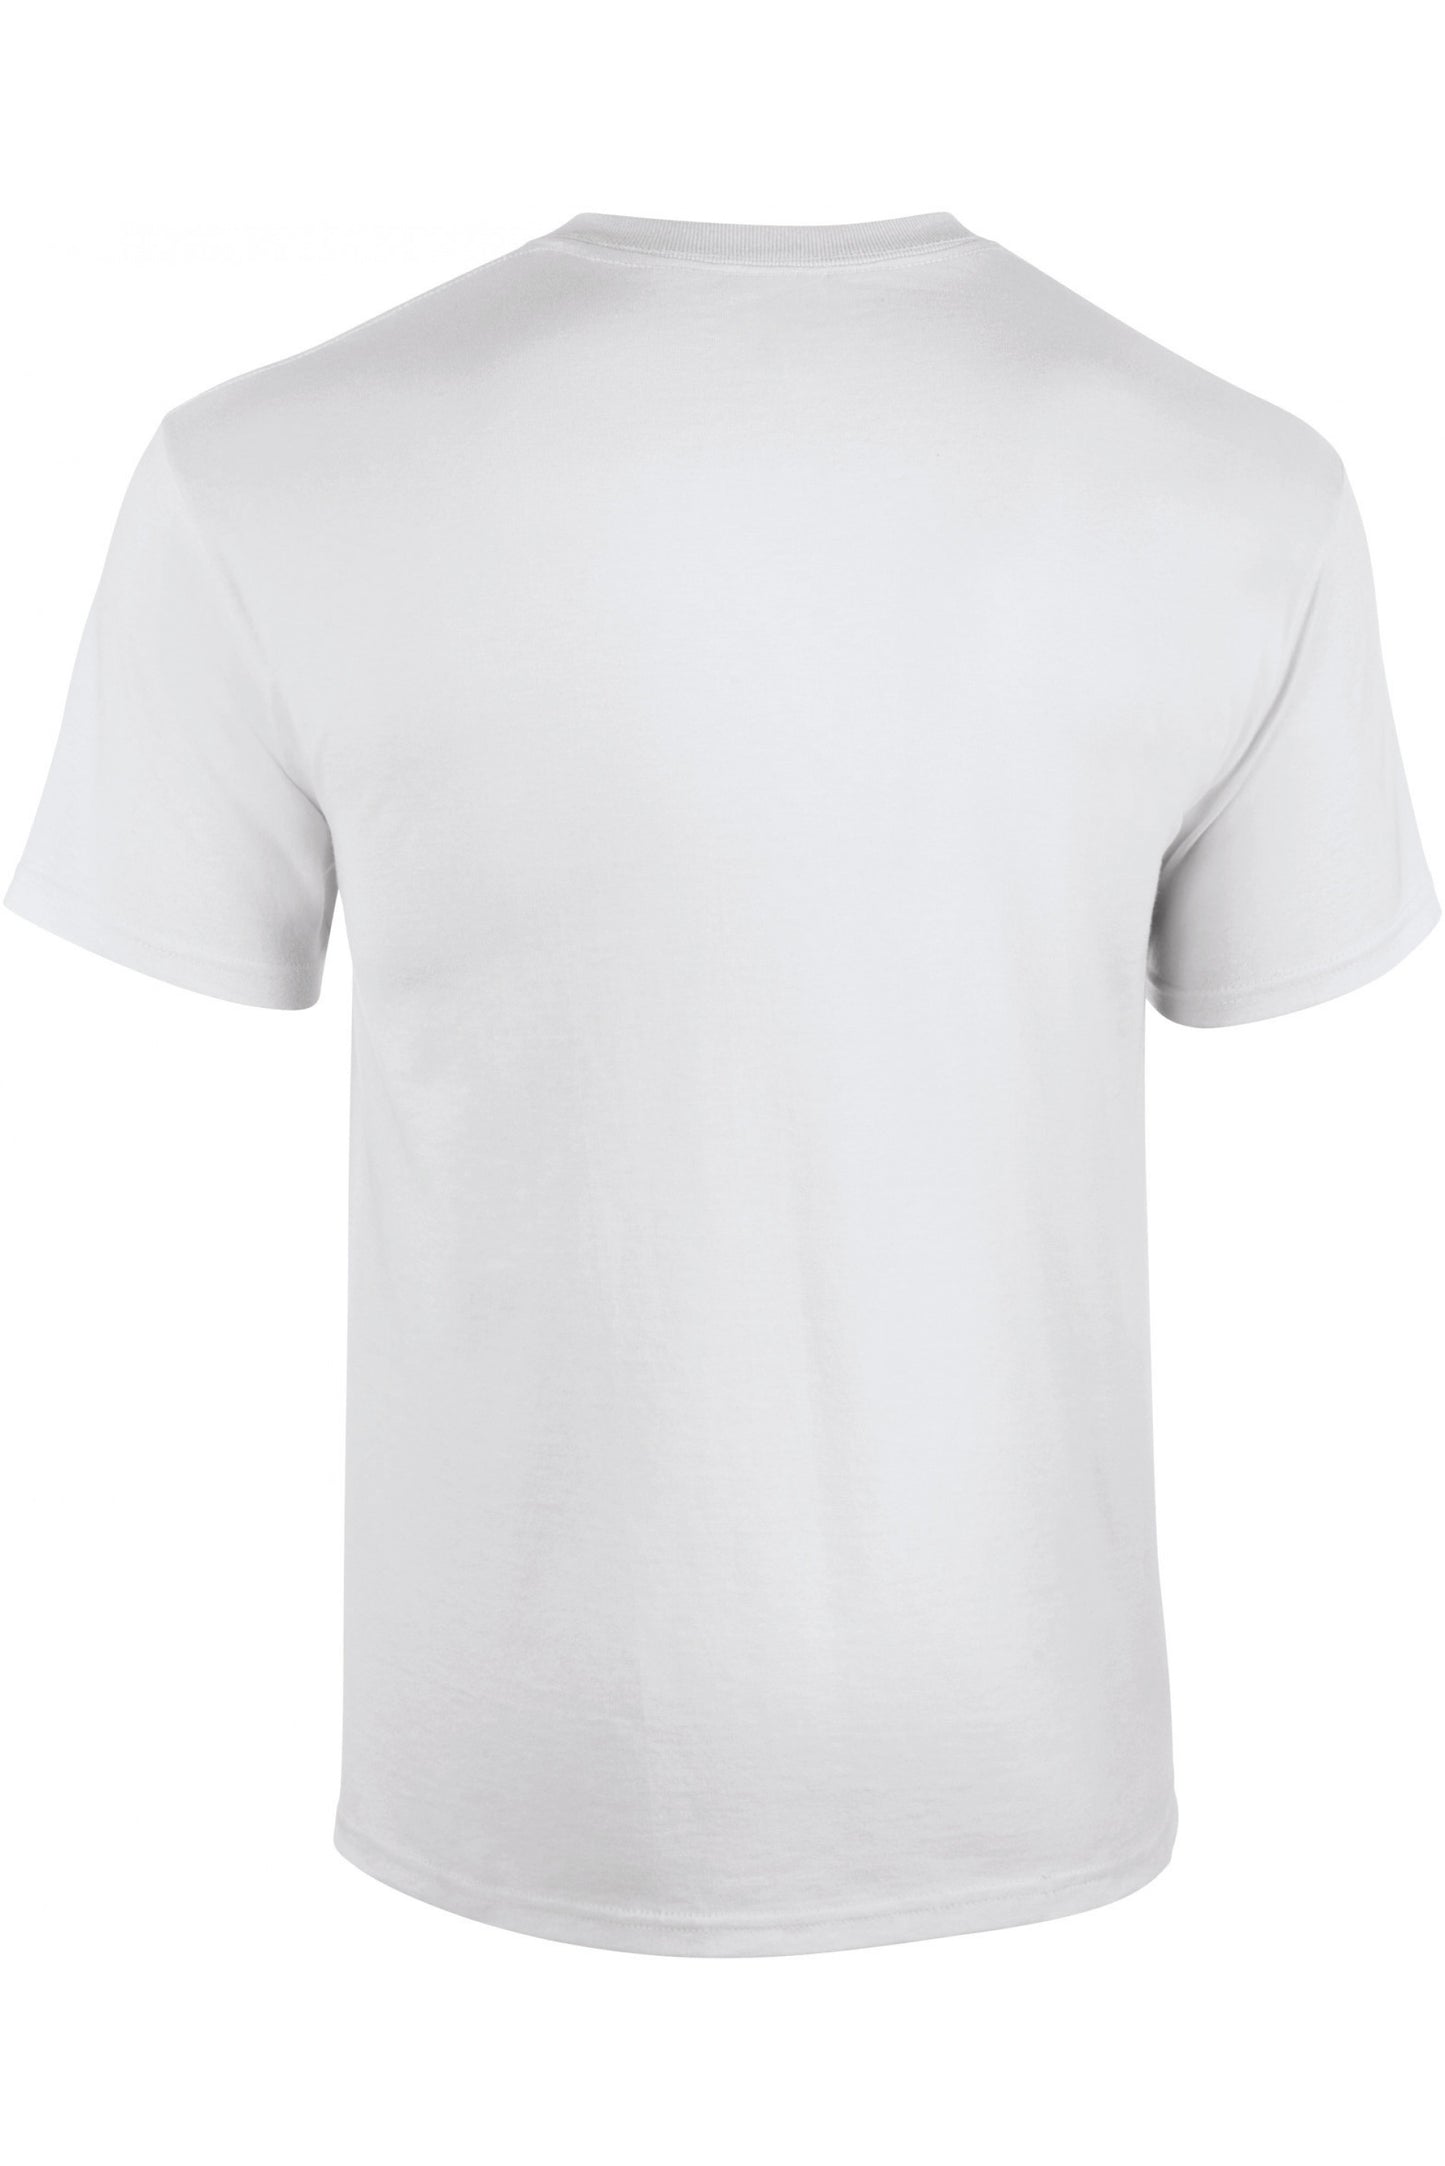 Everyone Basic T-shirt White